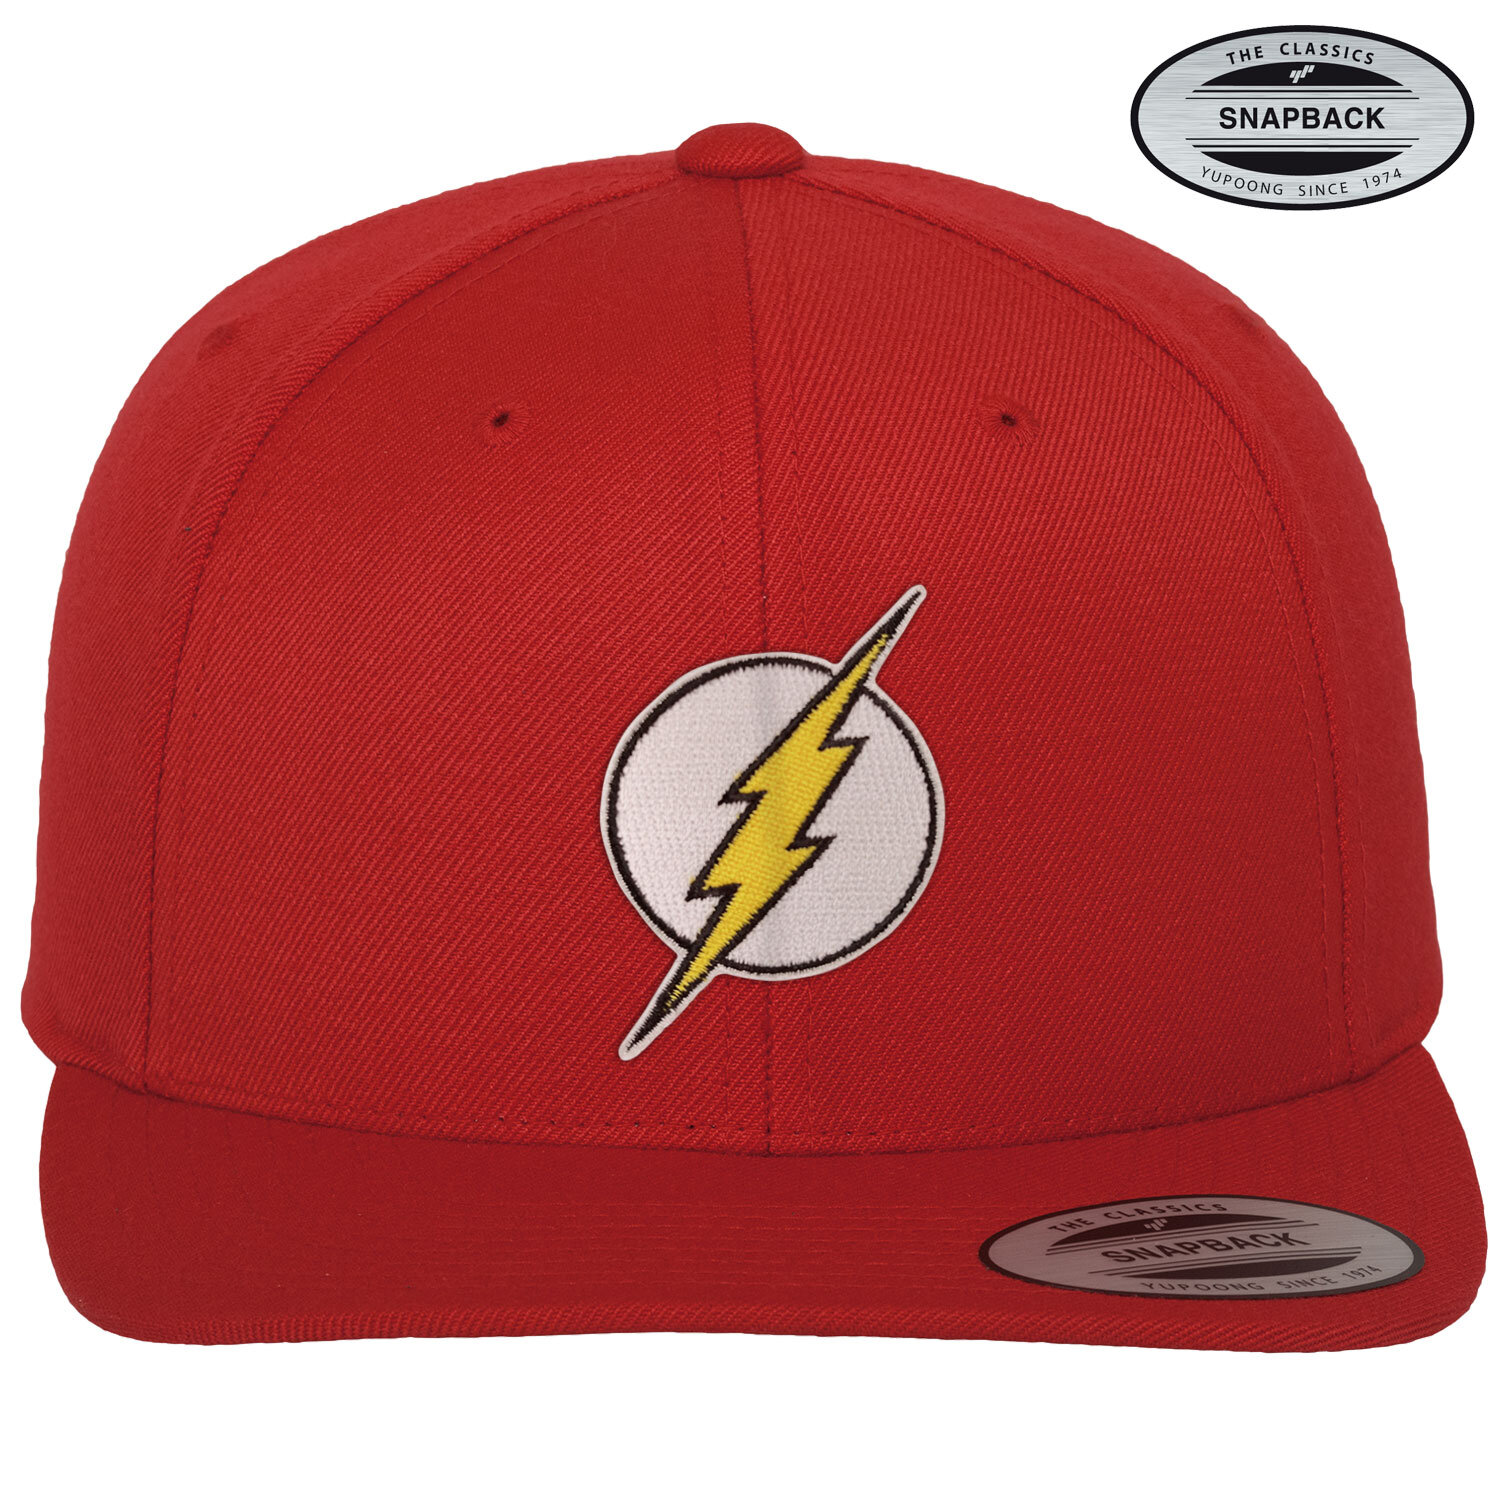 The Cap - Snapback Shirtstore Flash Premium